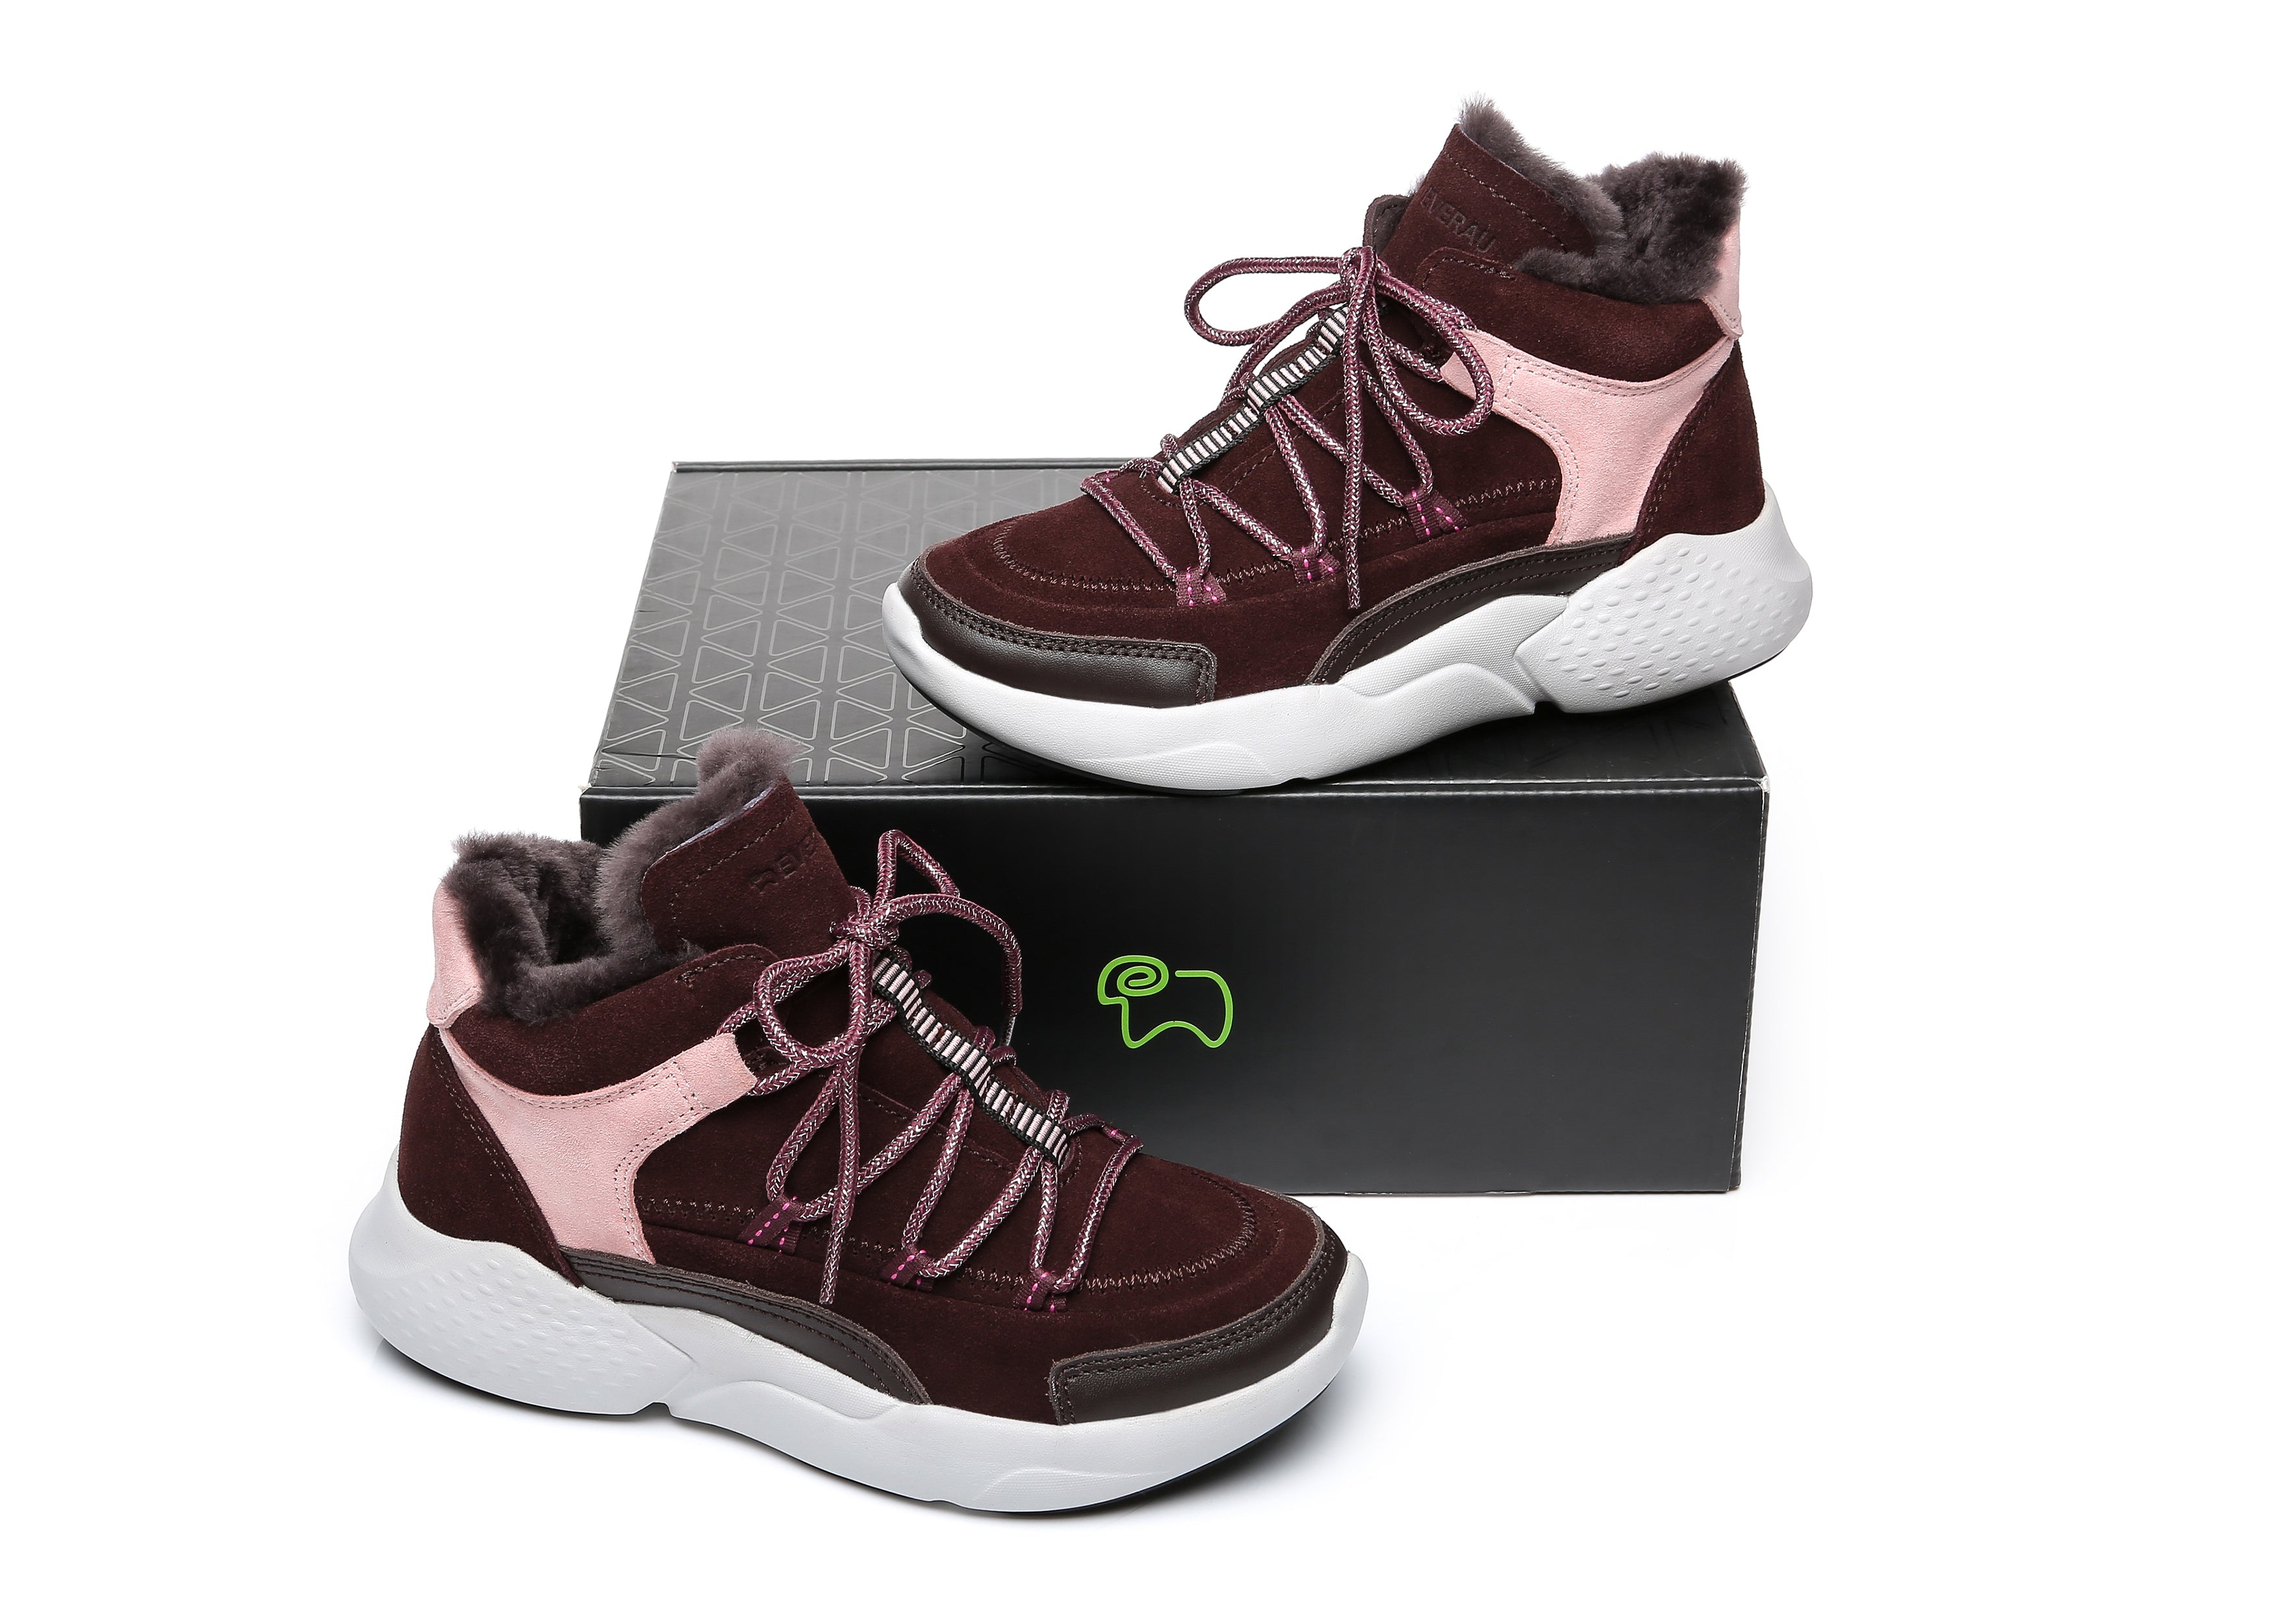 EVERAU® Sheepskin Lace-Up Sneakers Women Pink Jelly